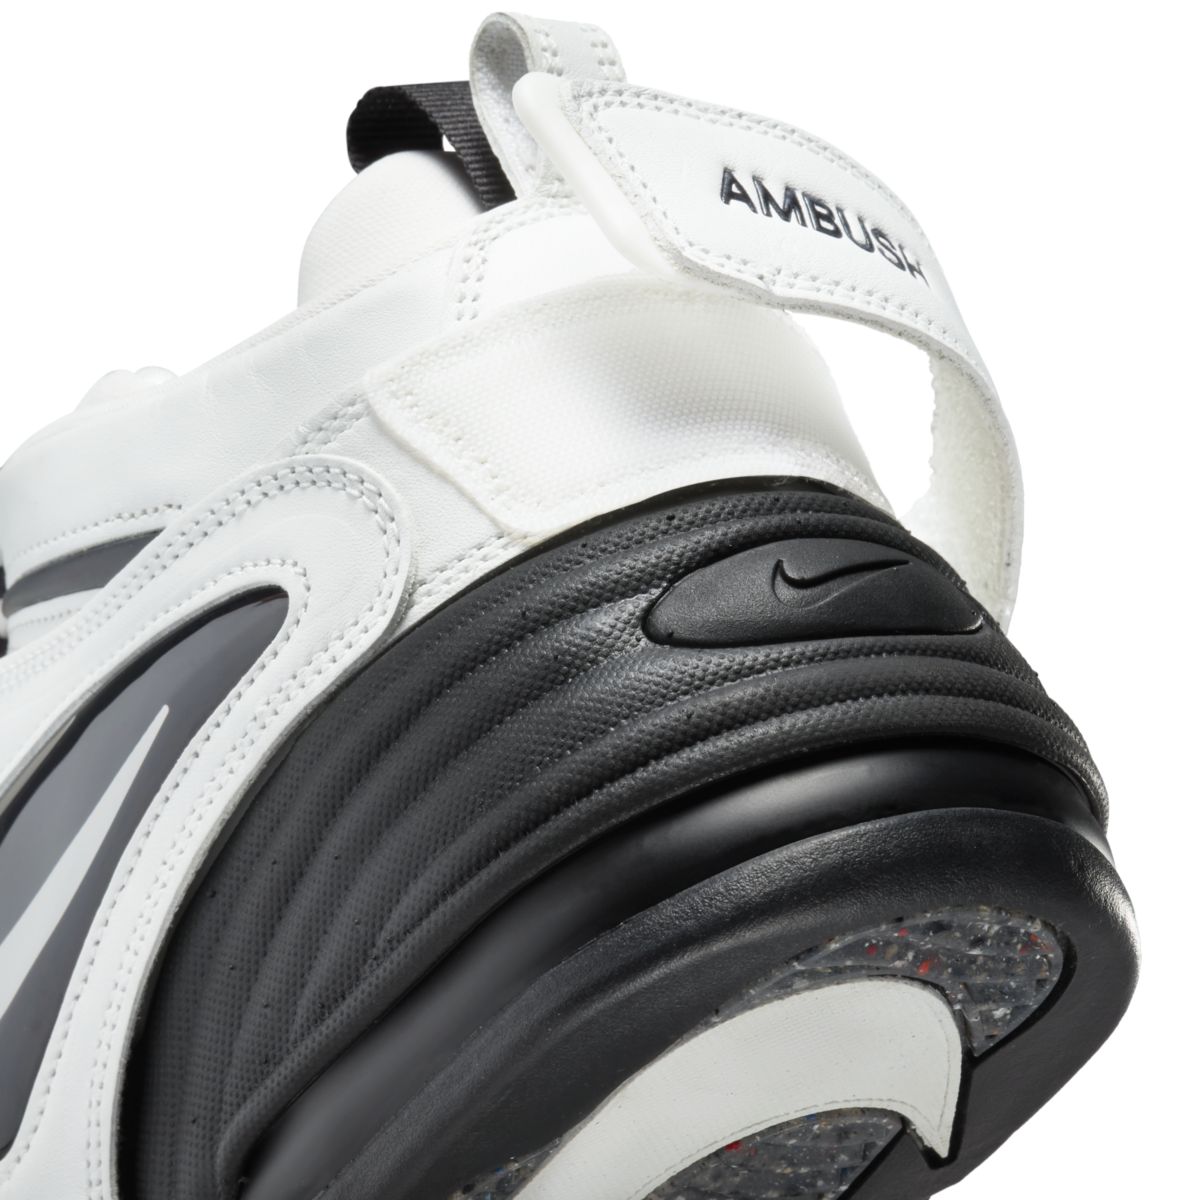 AMBUSH x Nike Air Adjust Force Summit White Black DM8465-100 8